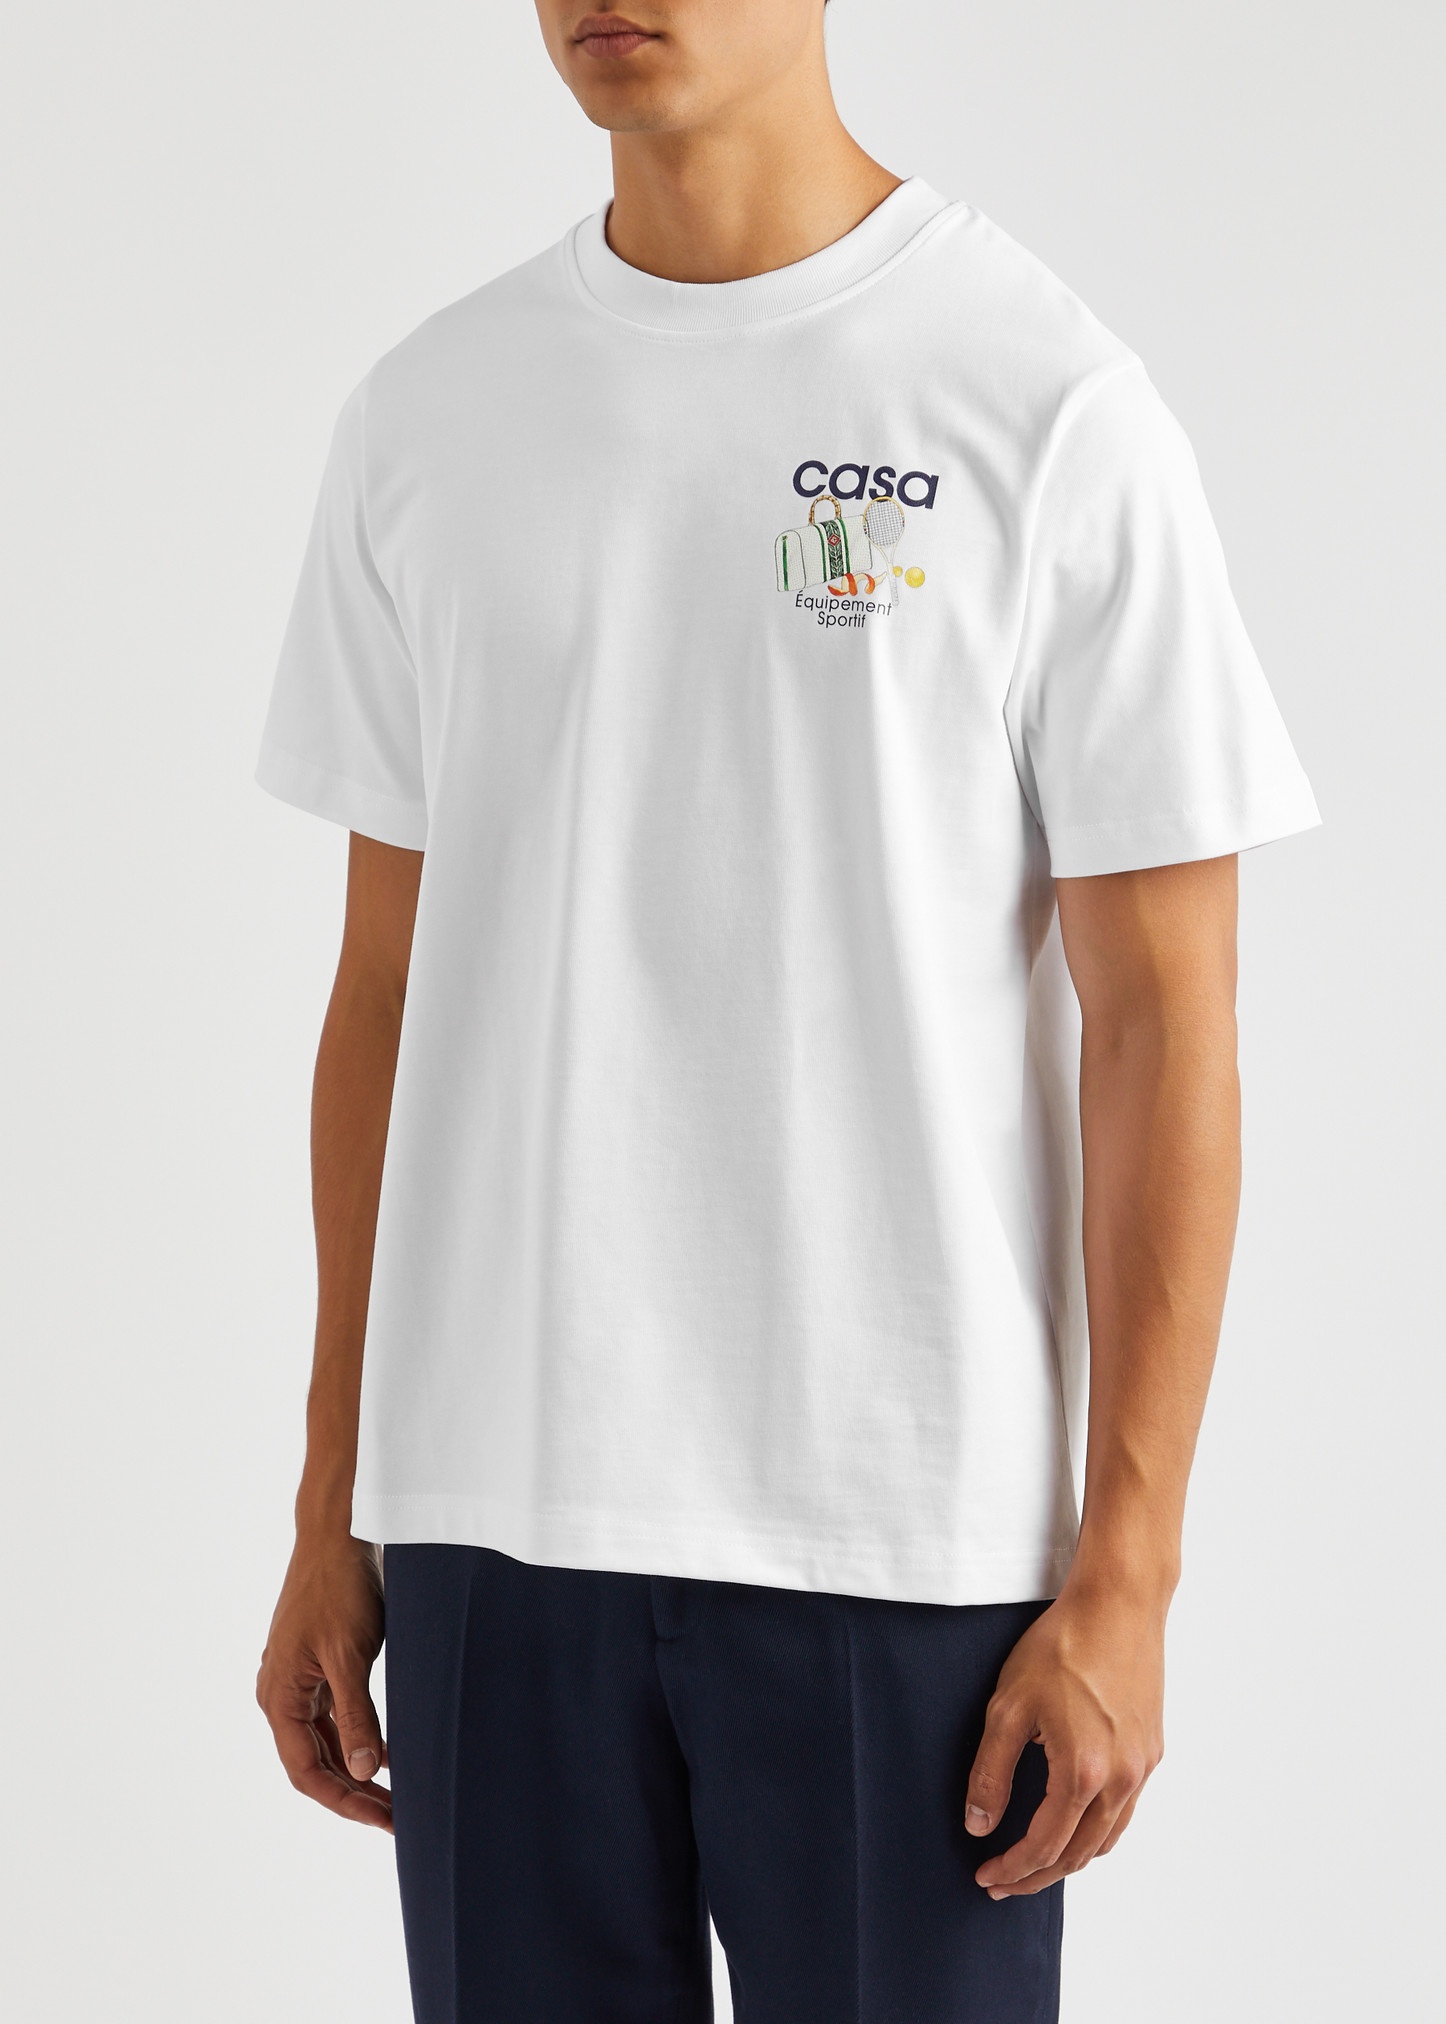 Équipement Sportif printed cotton T-shirt - 2